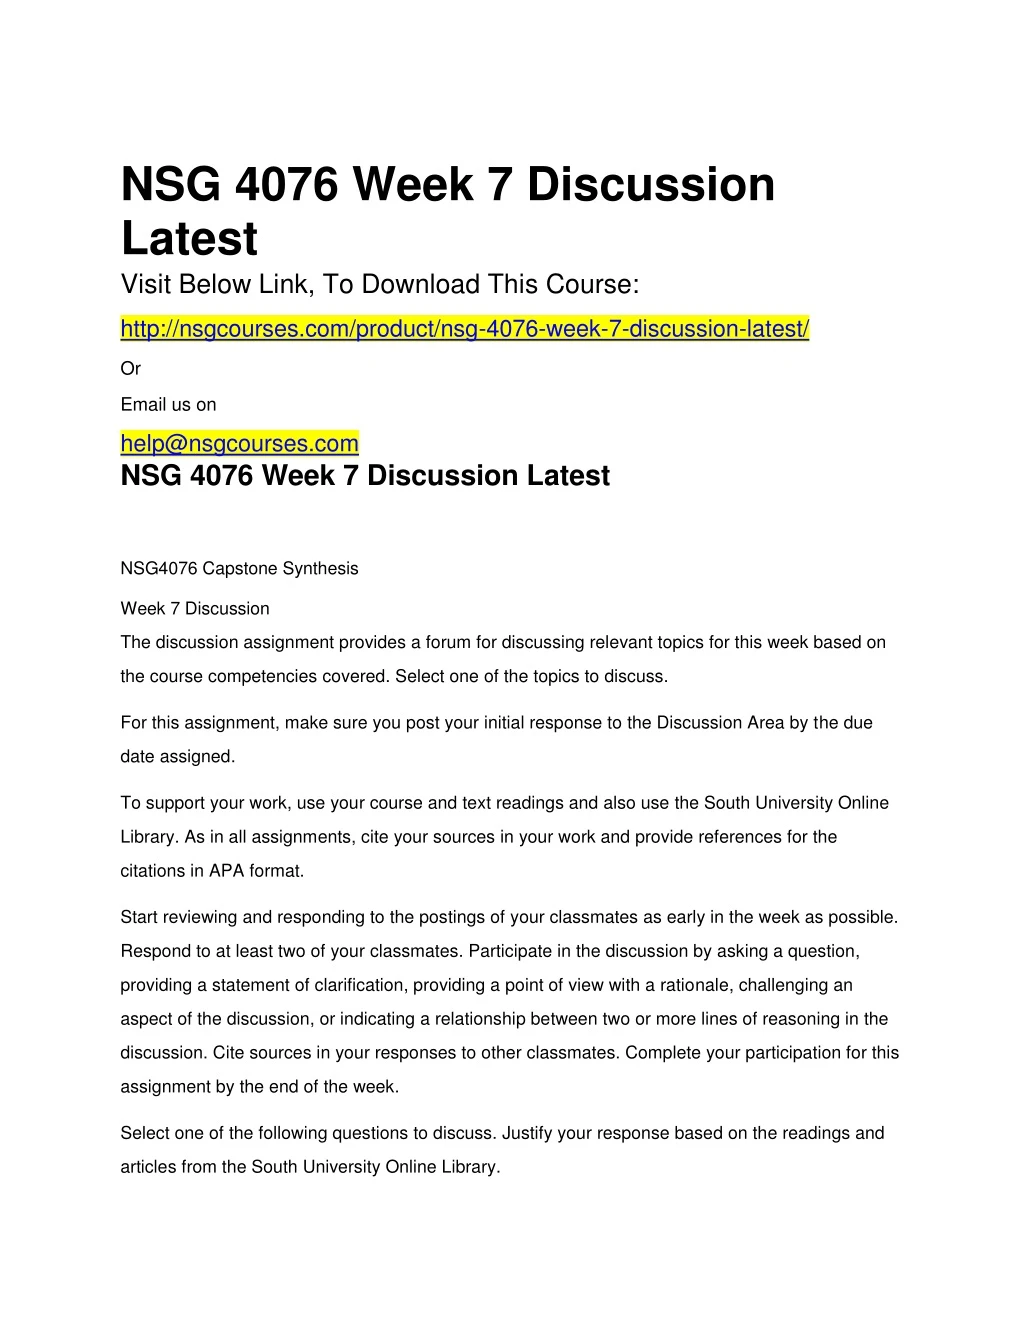 nsg 4076 week 7 discussion latest visit below